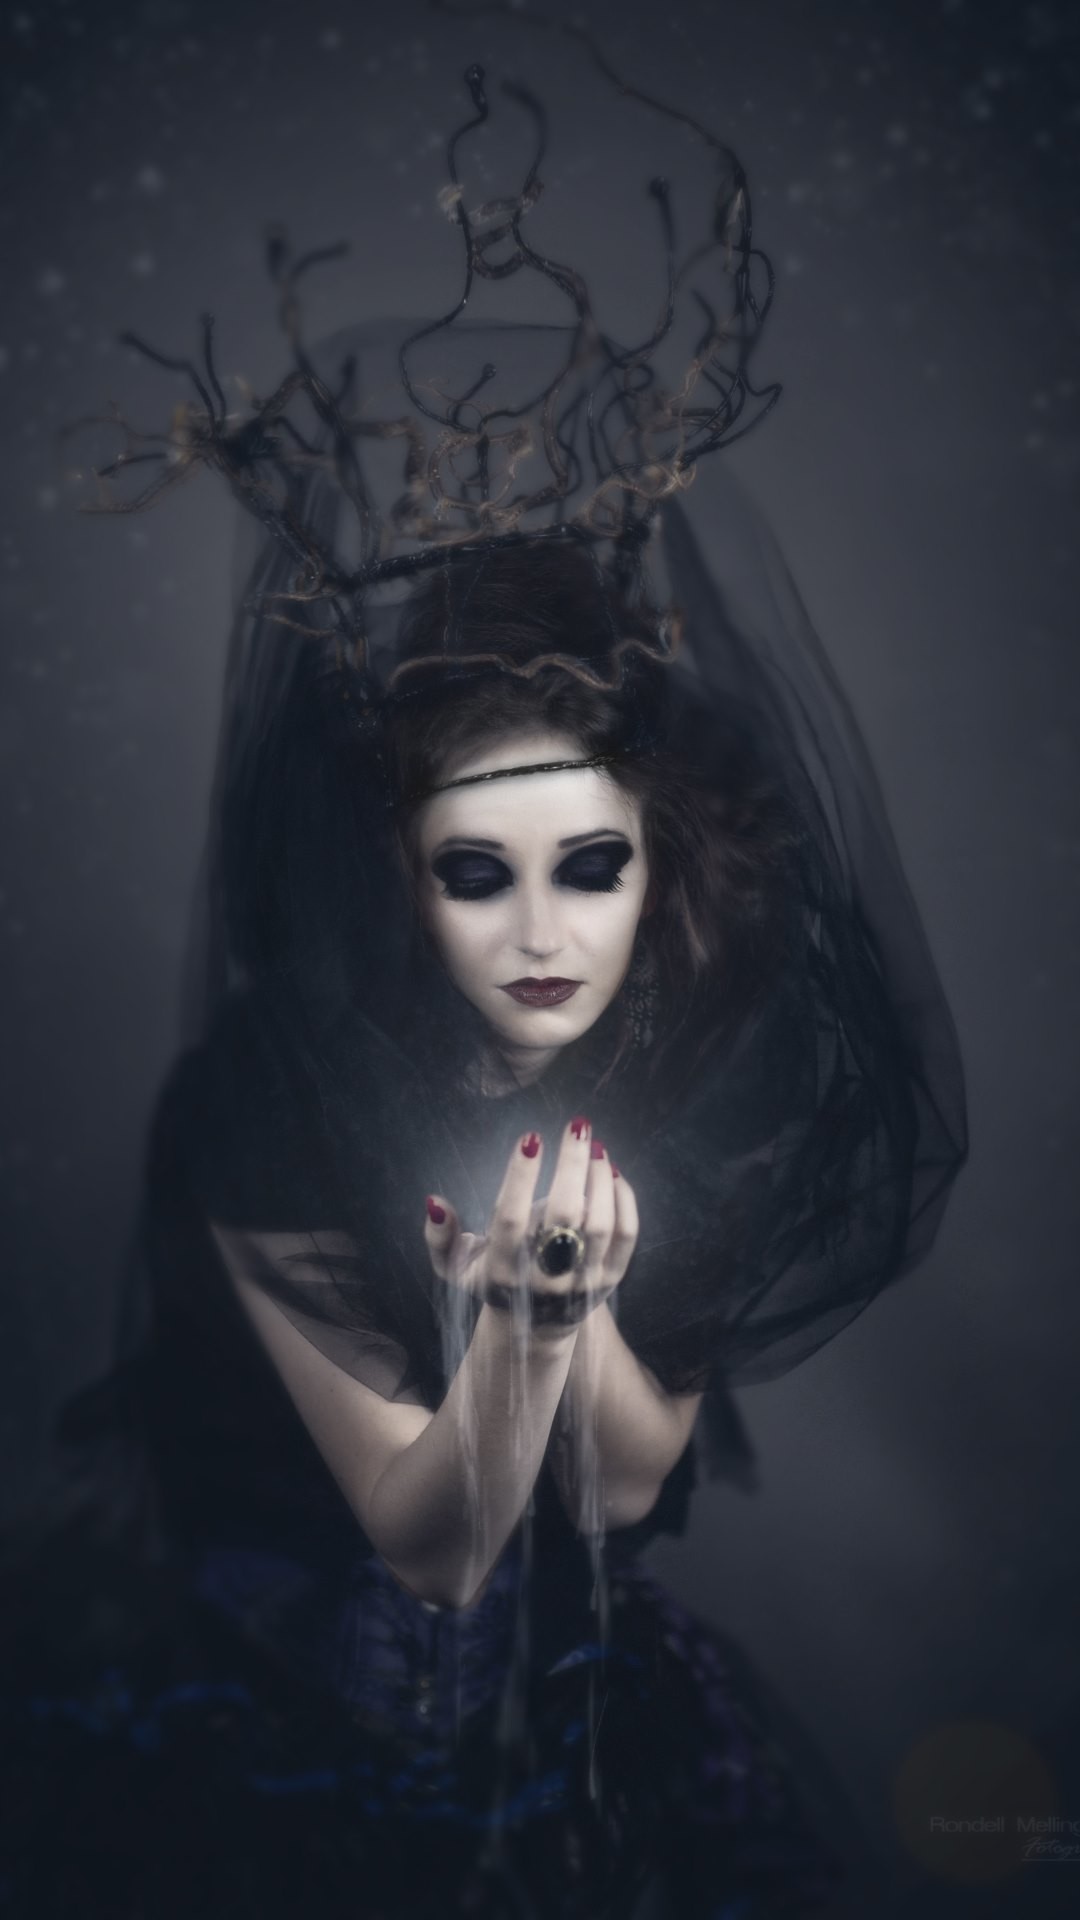 HD Wallpaper 3: Witch. Vampire. Girl Halloween Costume